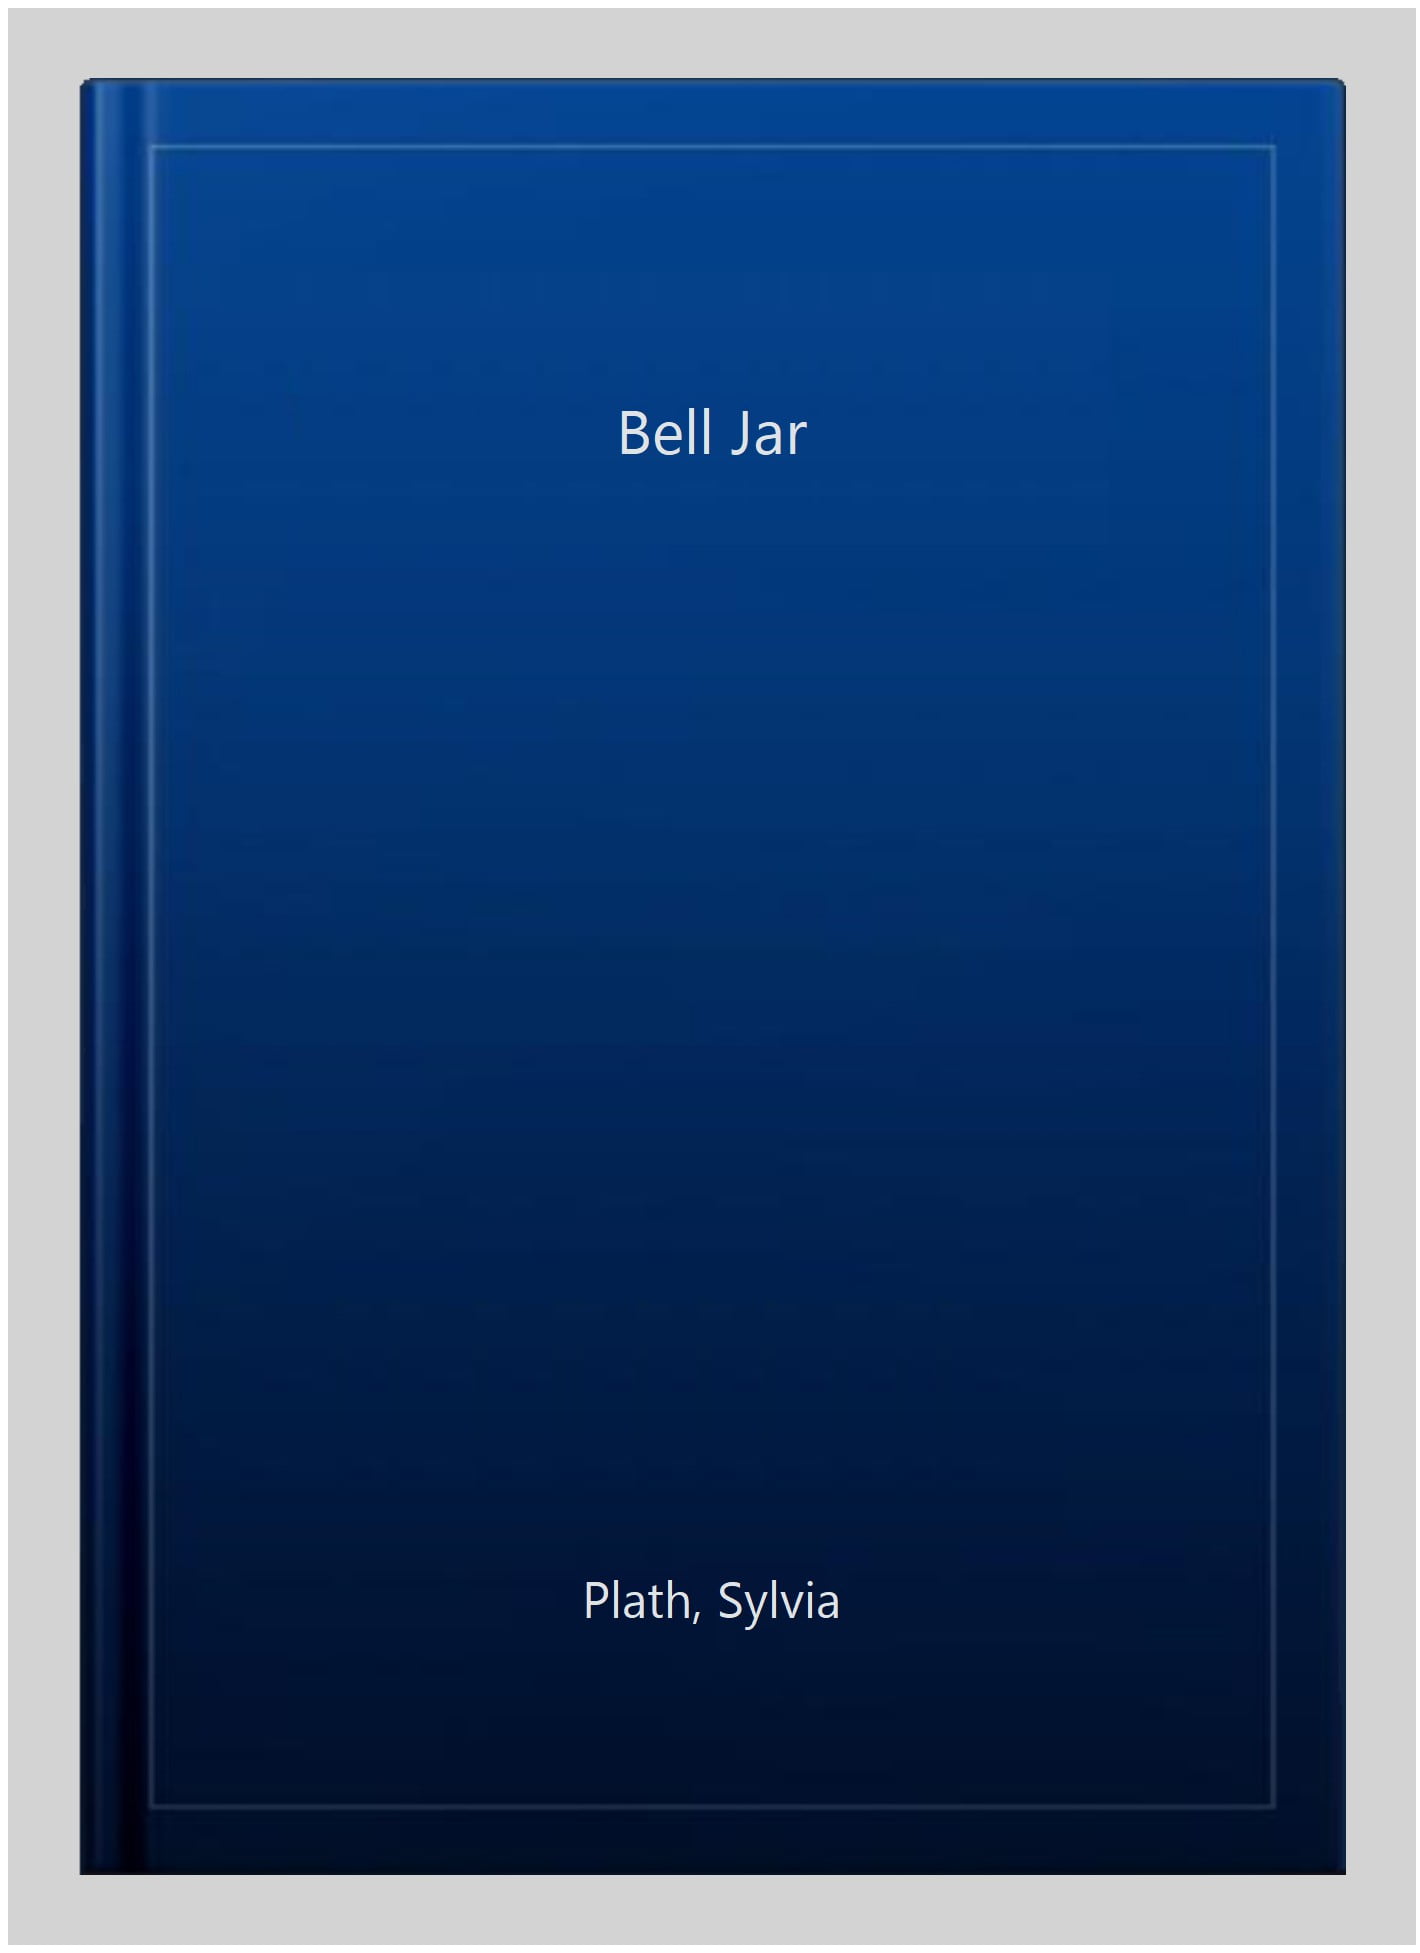 The Bell Jar: 9780571355068: : Books